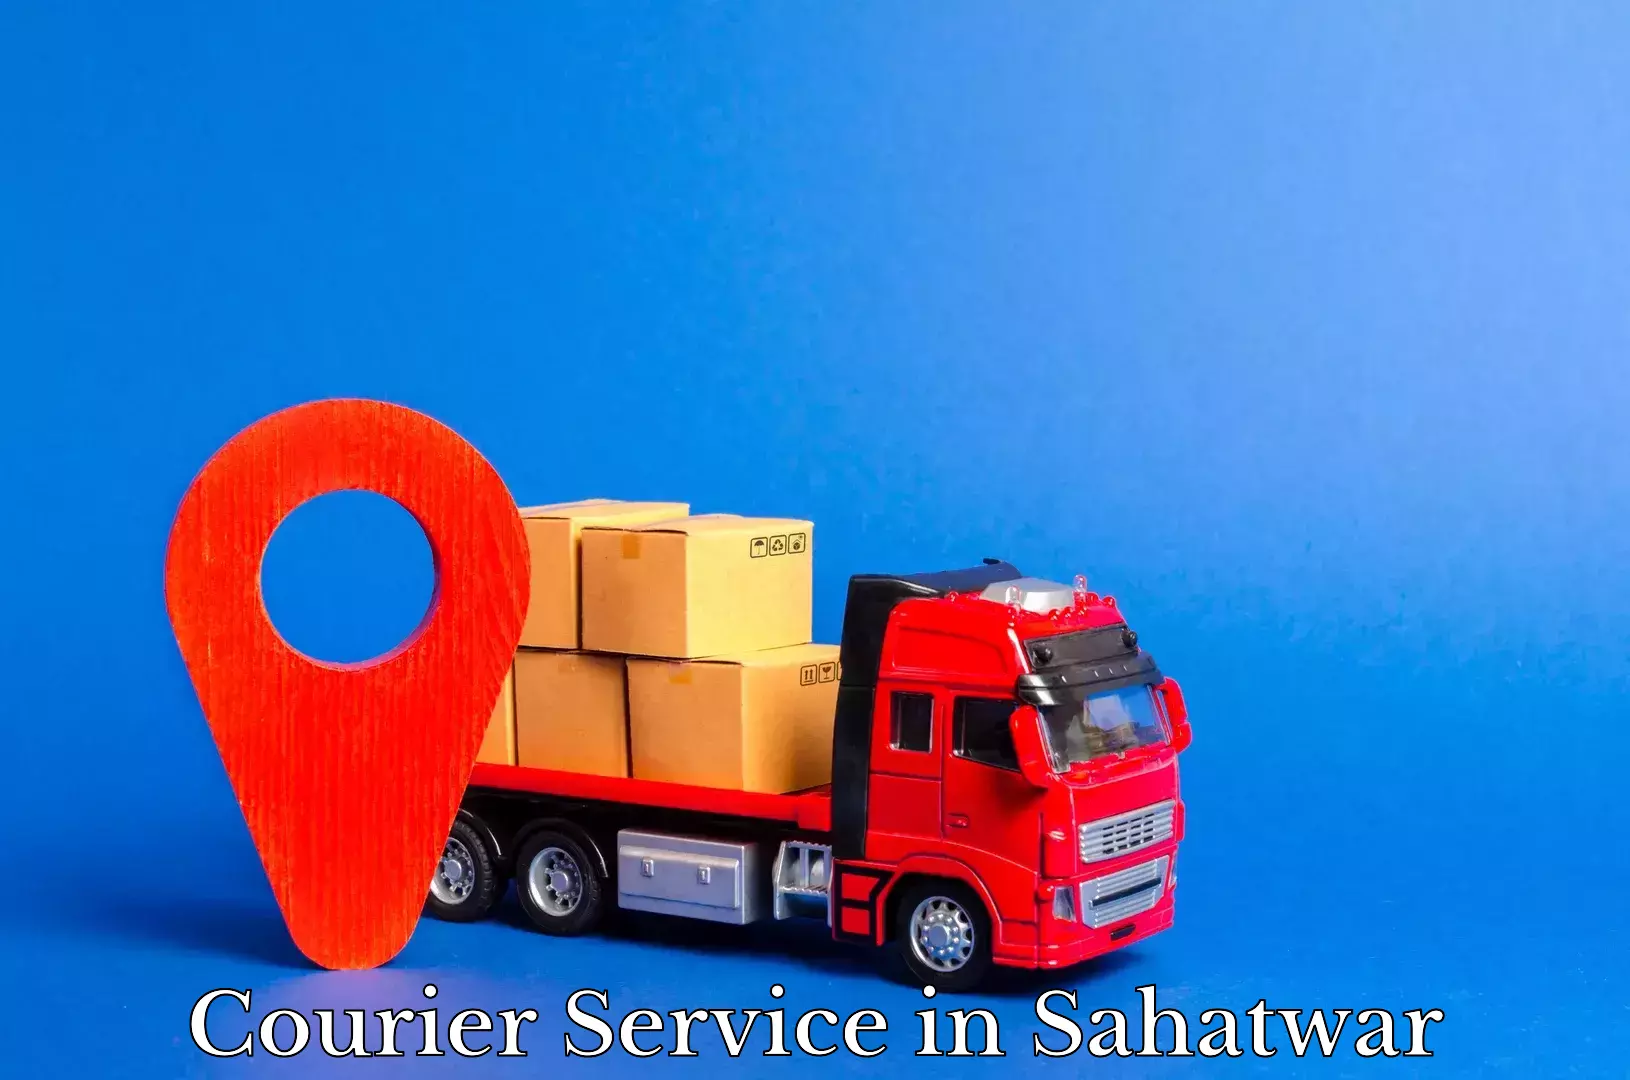 High-speed parcel service in Sahatwar